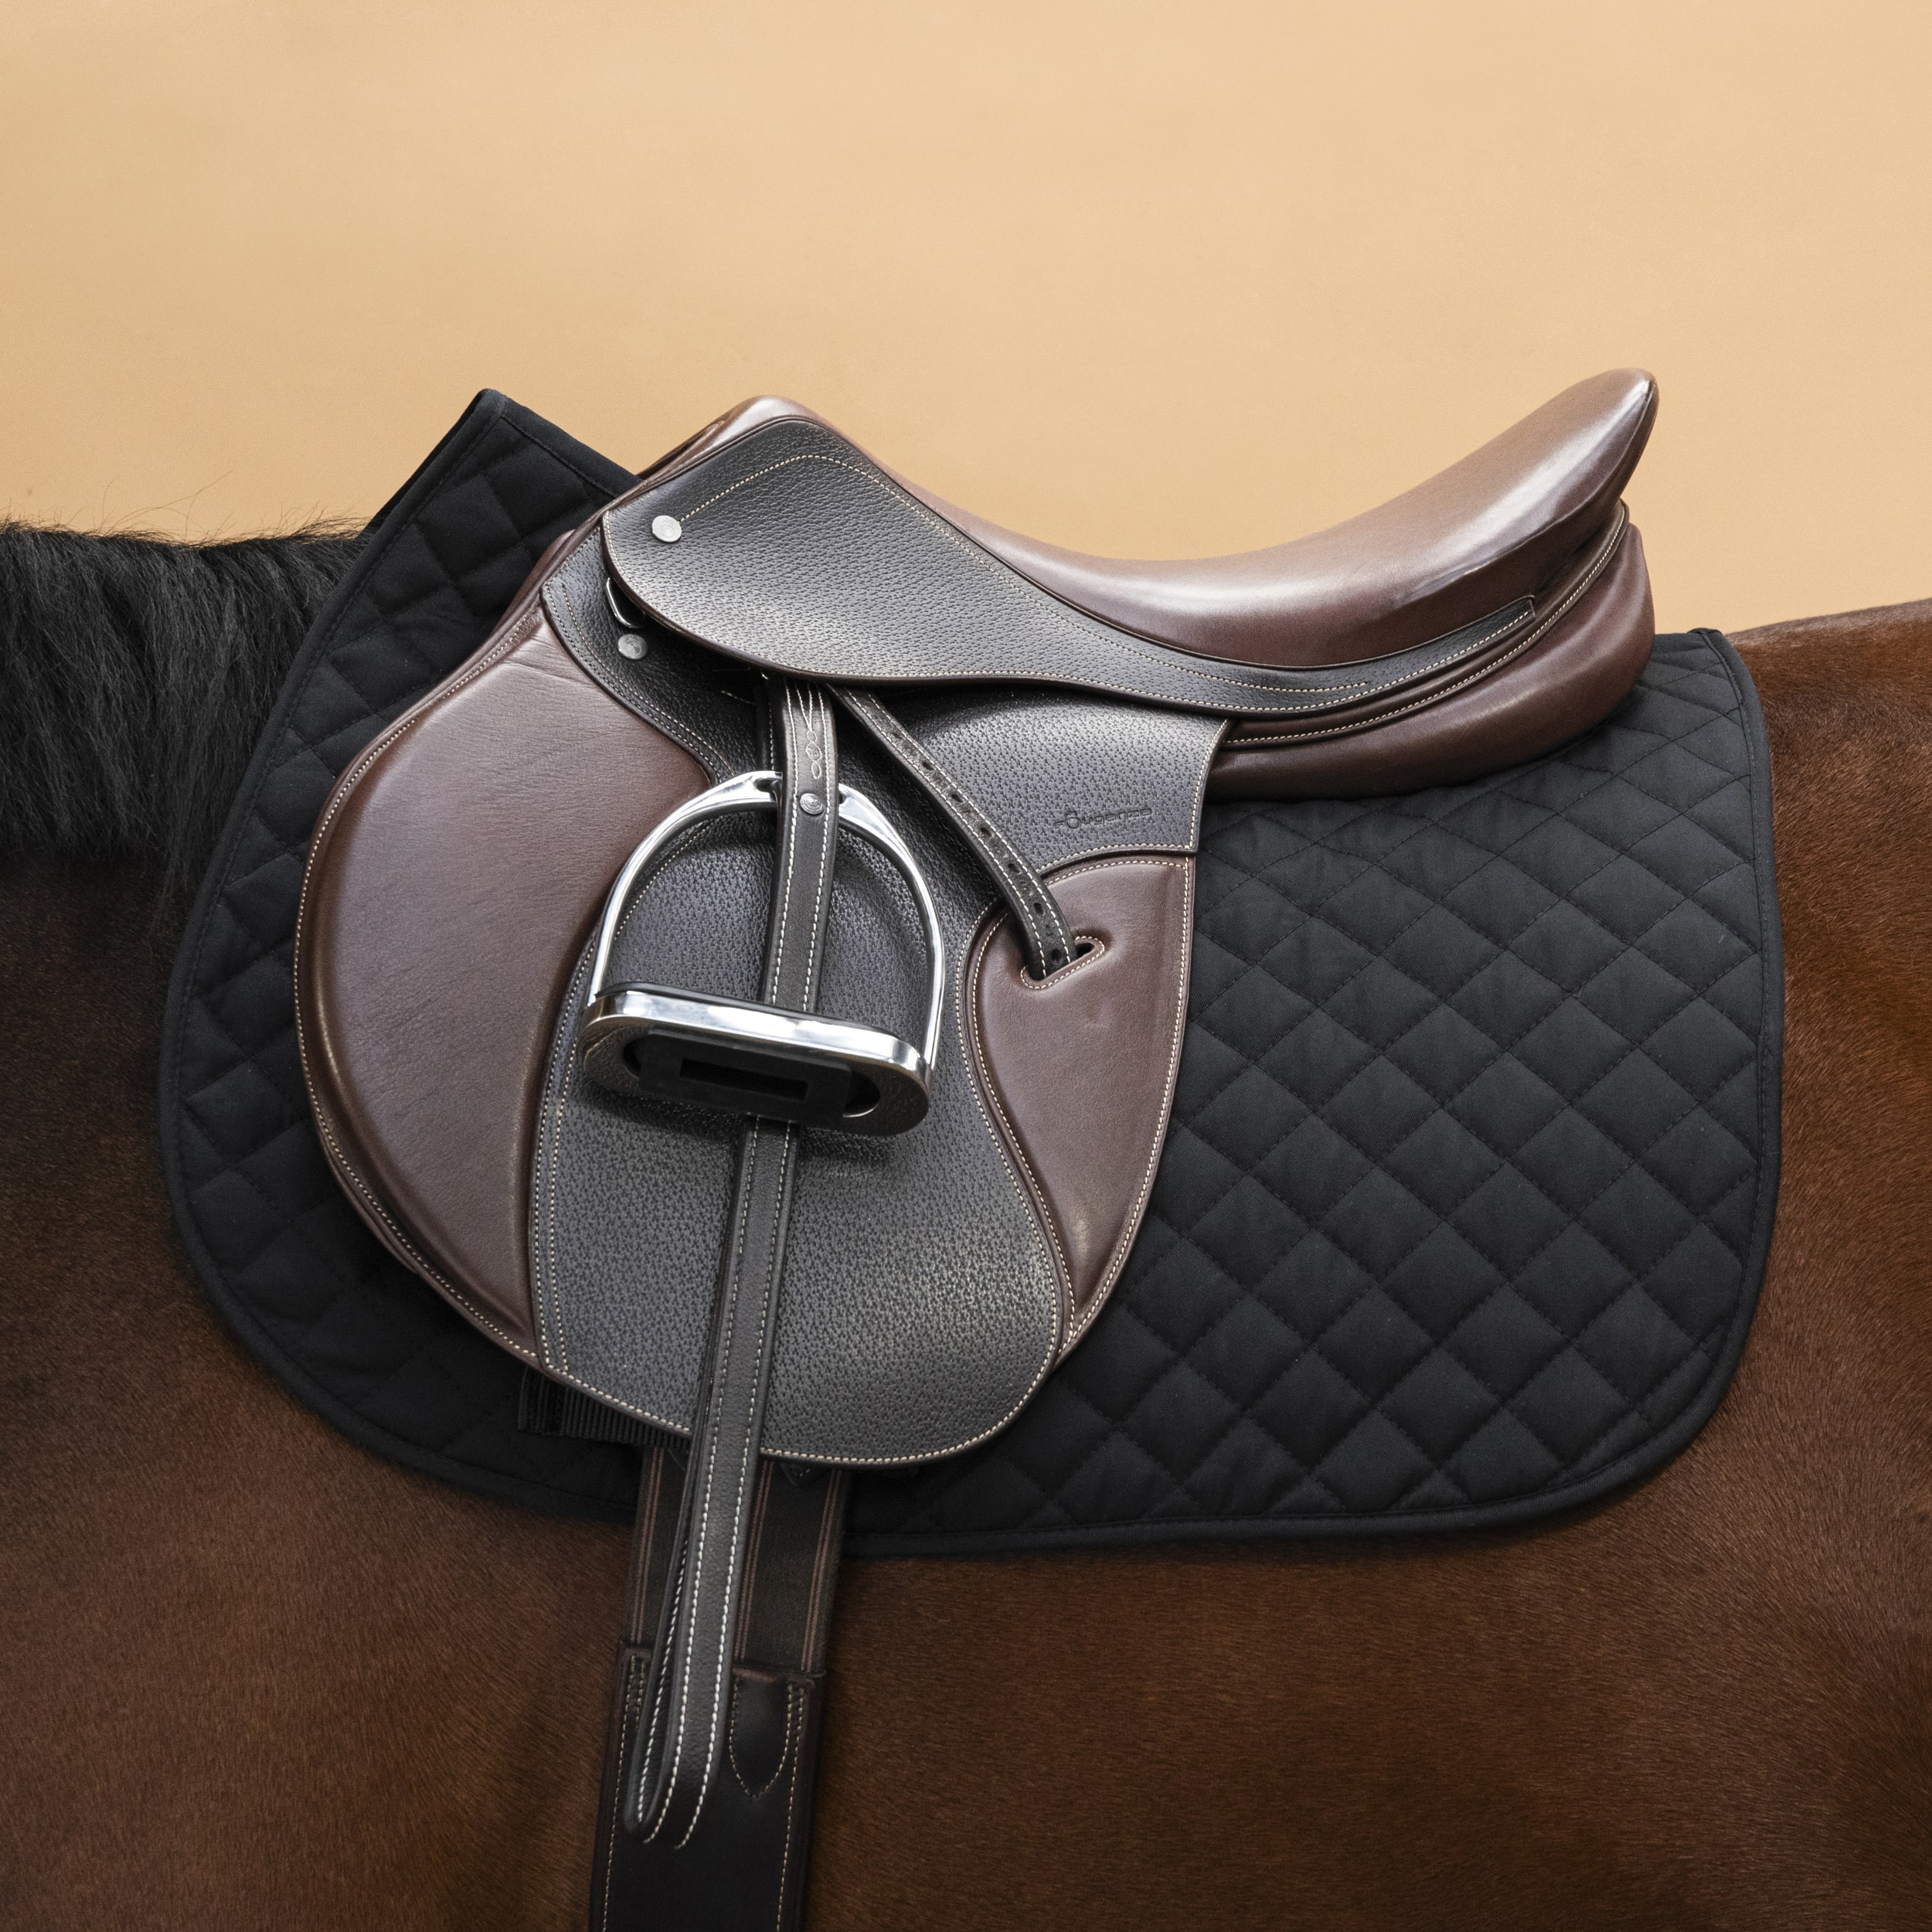 Image of Equestrian saddles